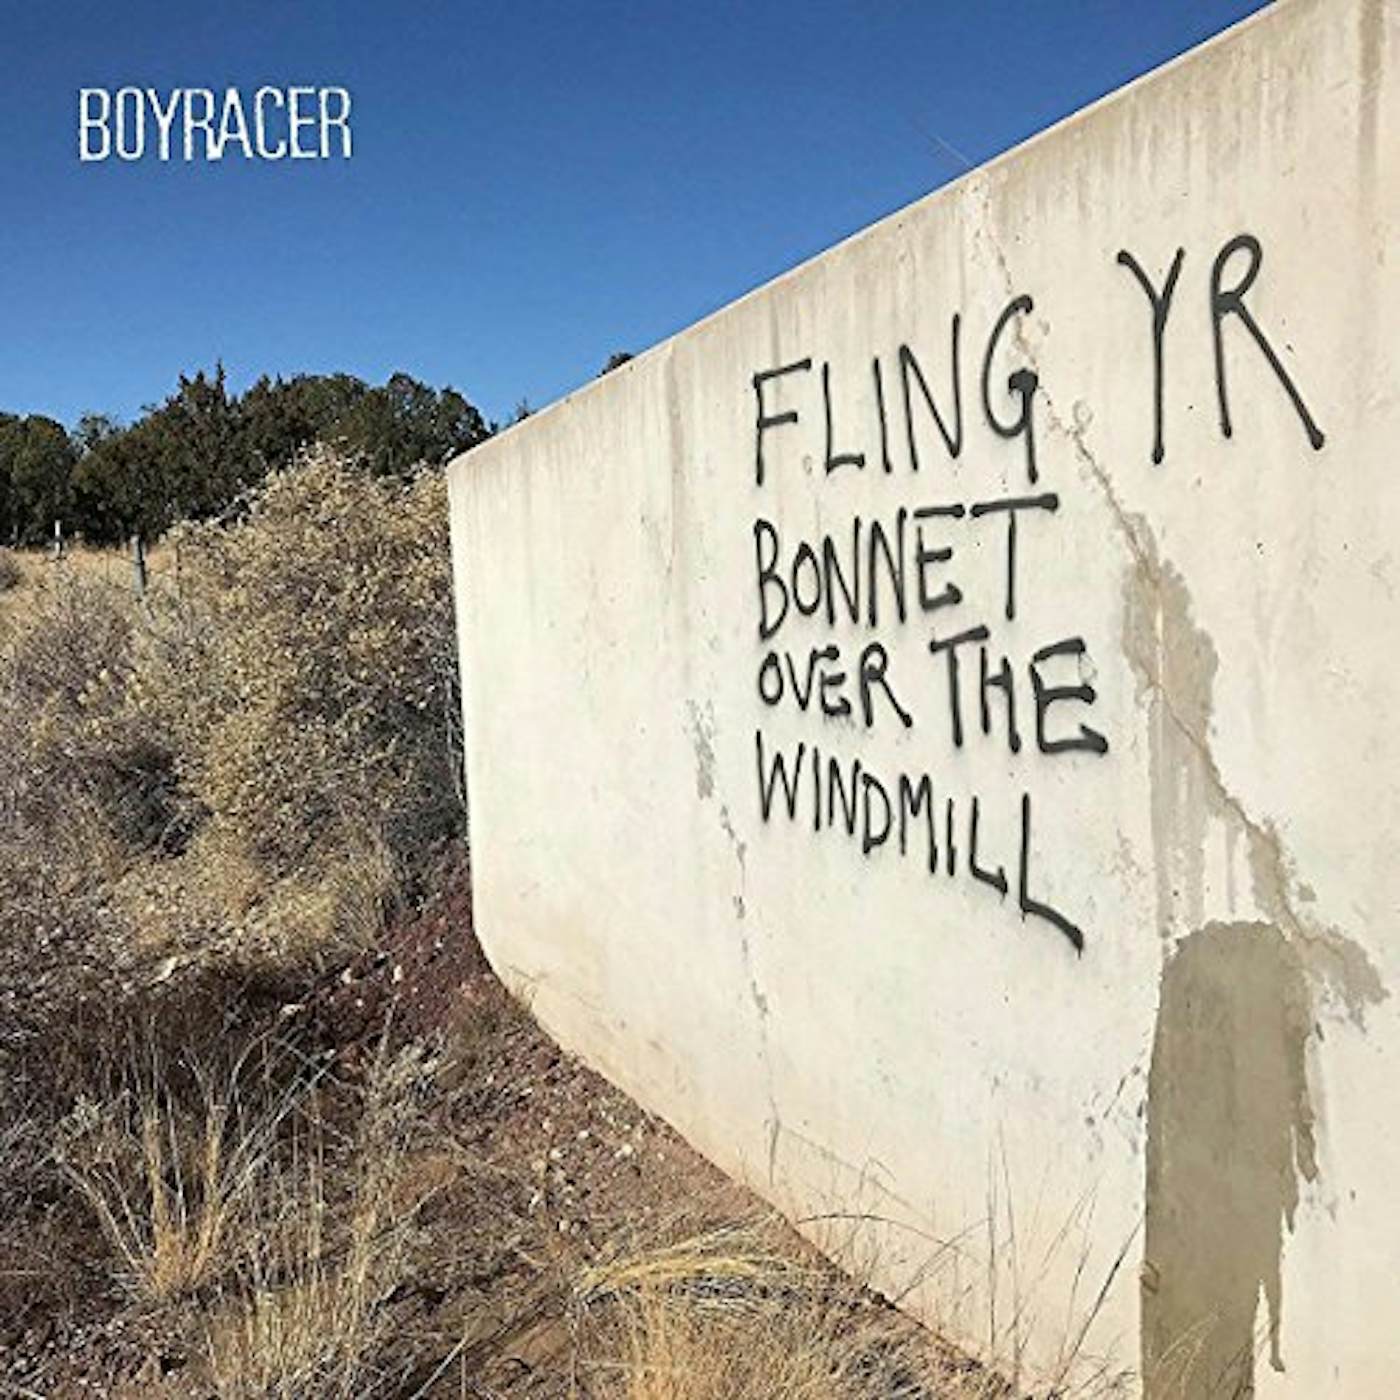 Boyracer FLING YR BONNET OVER THE WINDMILL (SARAH SINGLES) Vinyl Record